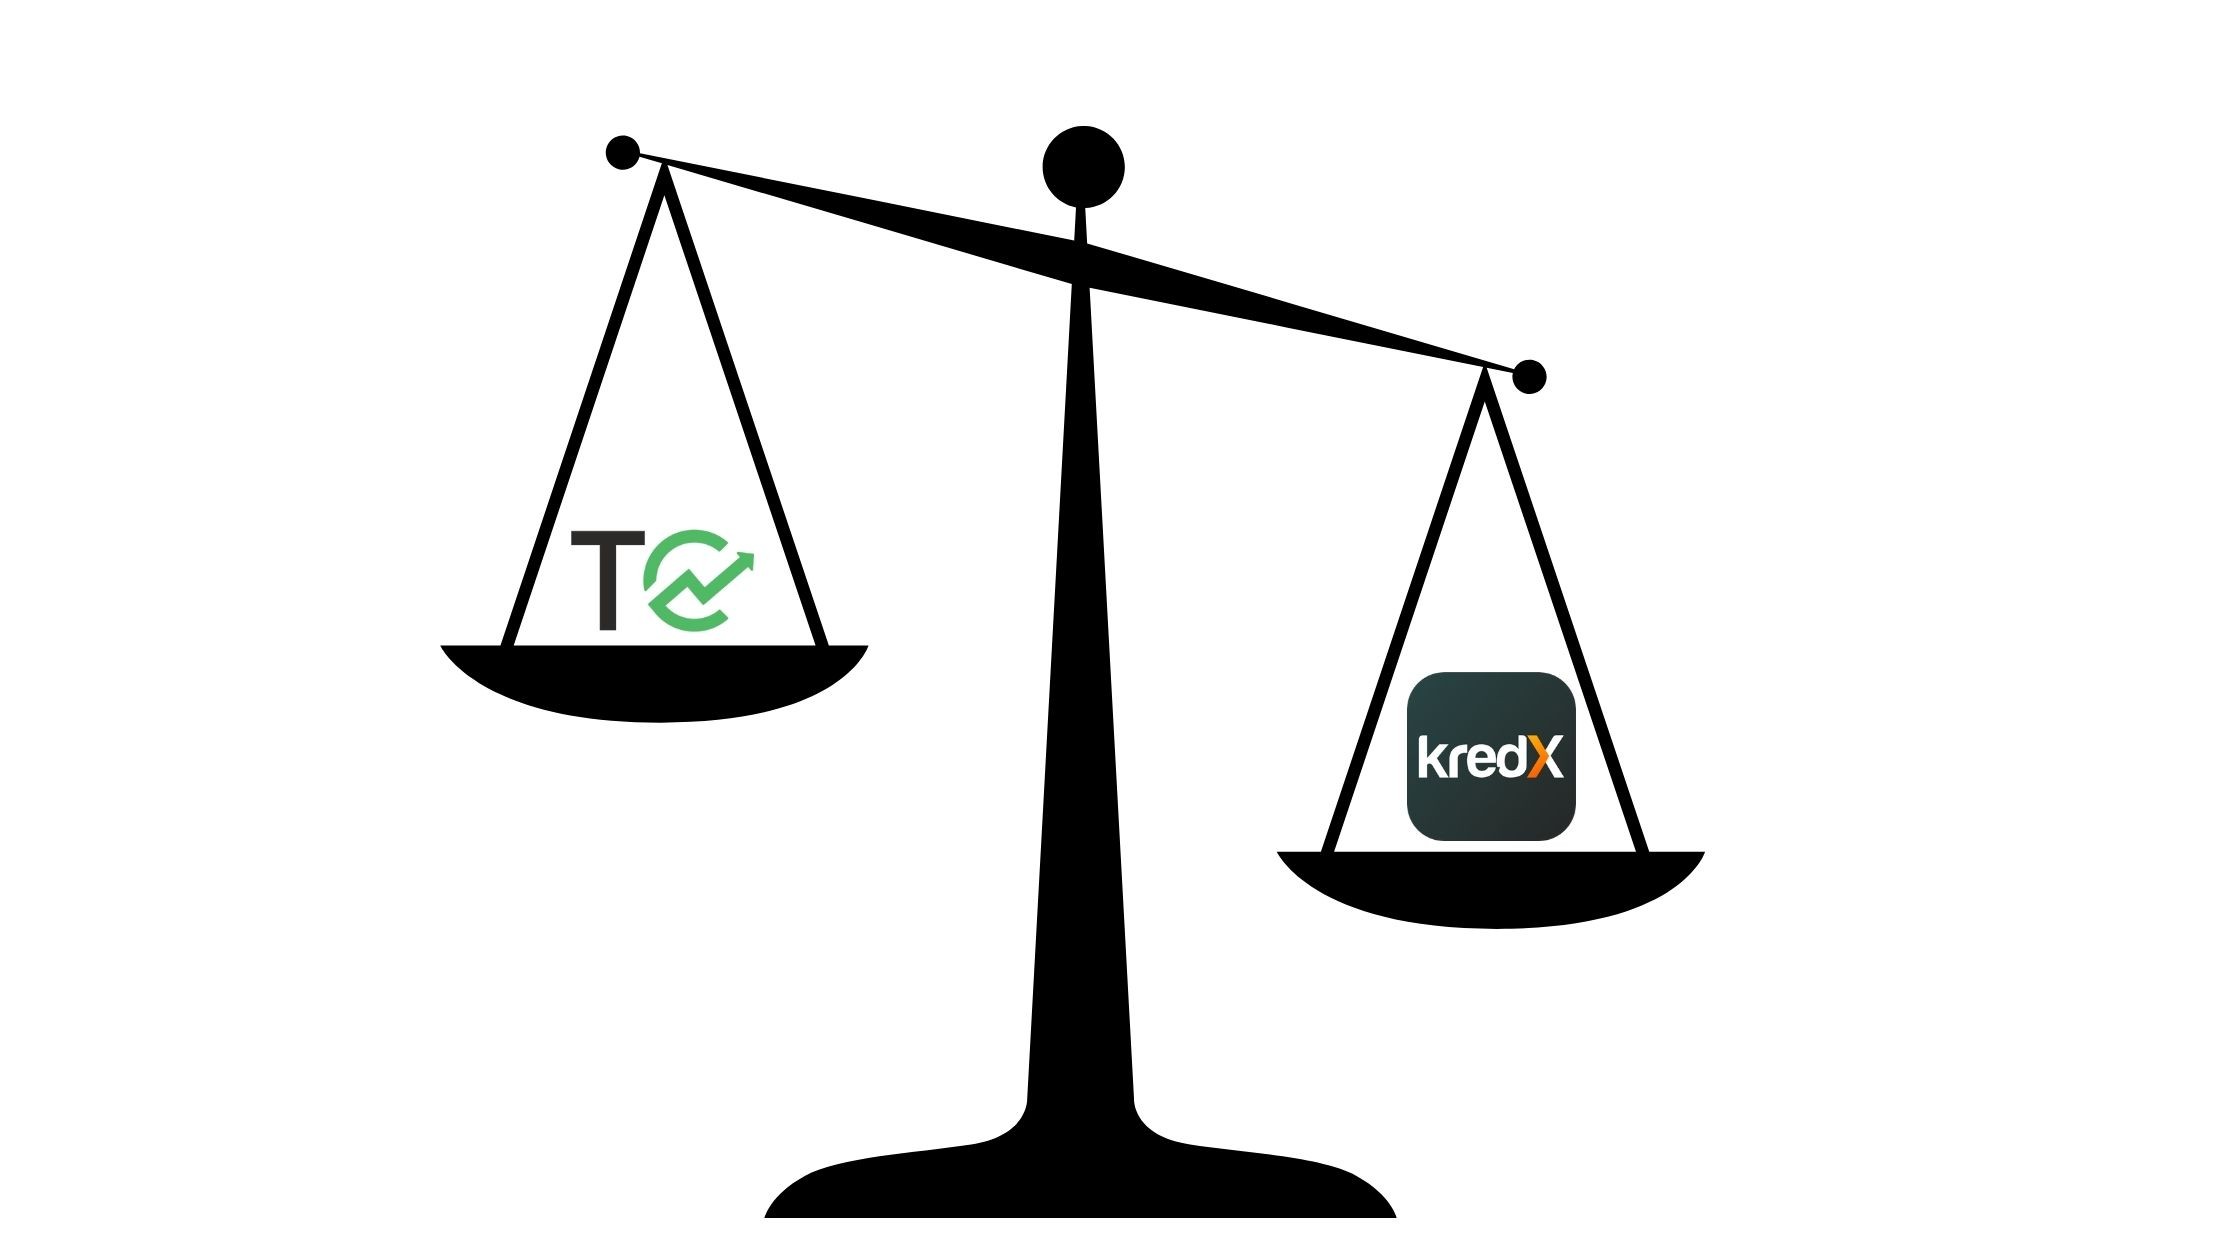 Tradecred vs Kredx